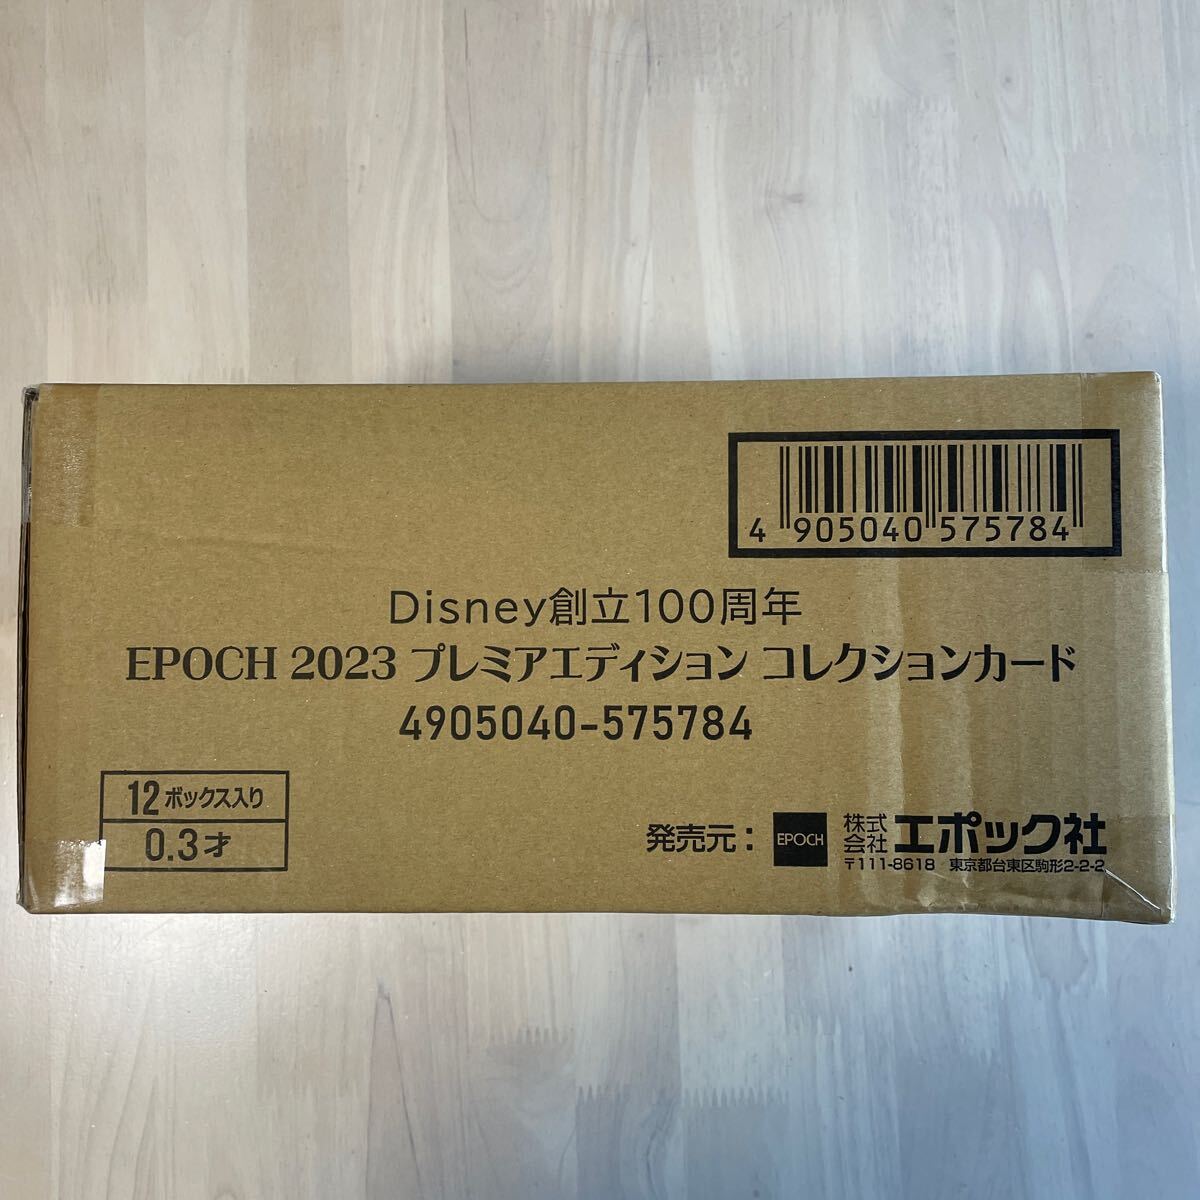 EPOCH エポック2023 PREMIER EDITION Disney 創立100周年 コレクションカード 新品未開封 カートン 検索用 ディズニー 100 プレミア _画像3